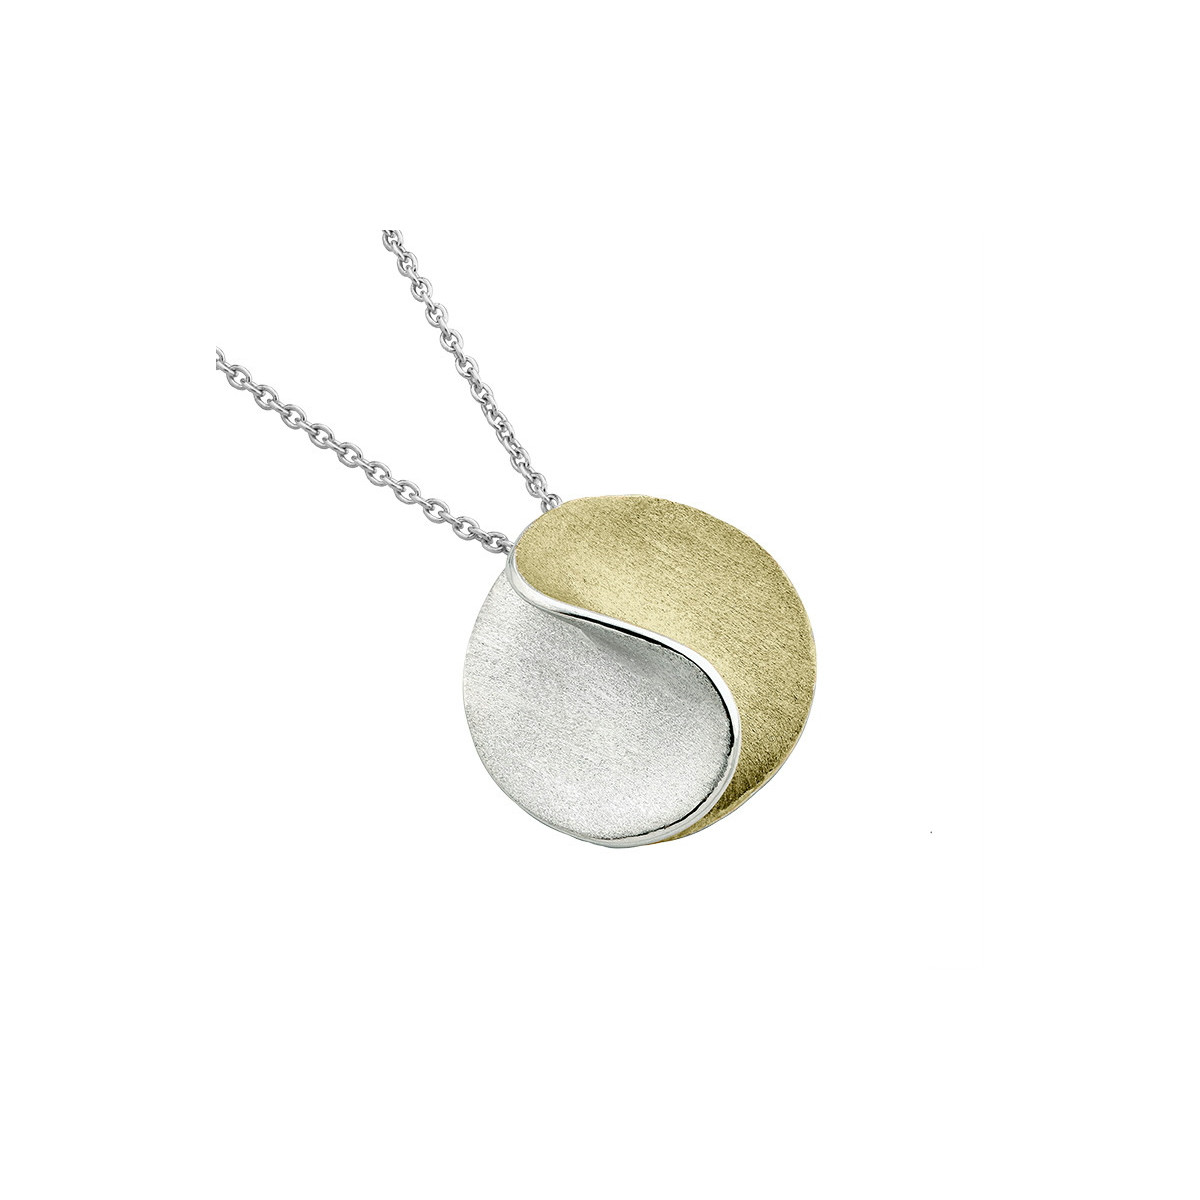 SUN Necklace in Silver. 18k Gold Vermeil